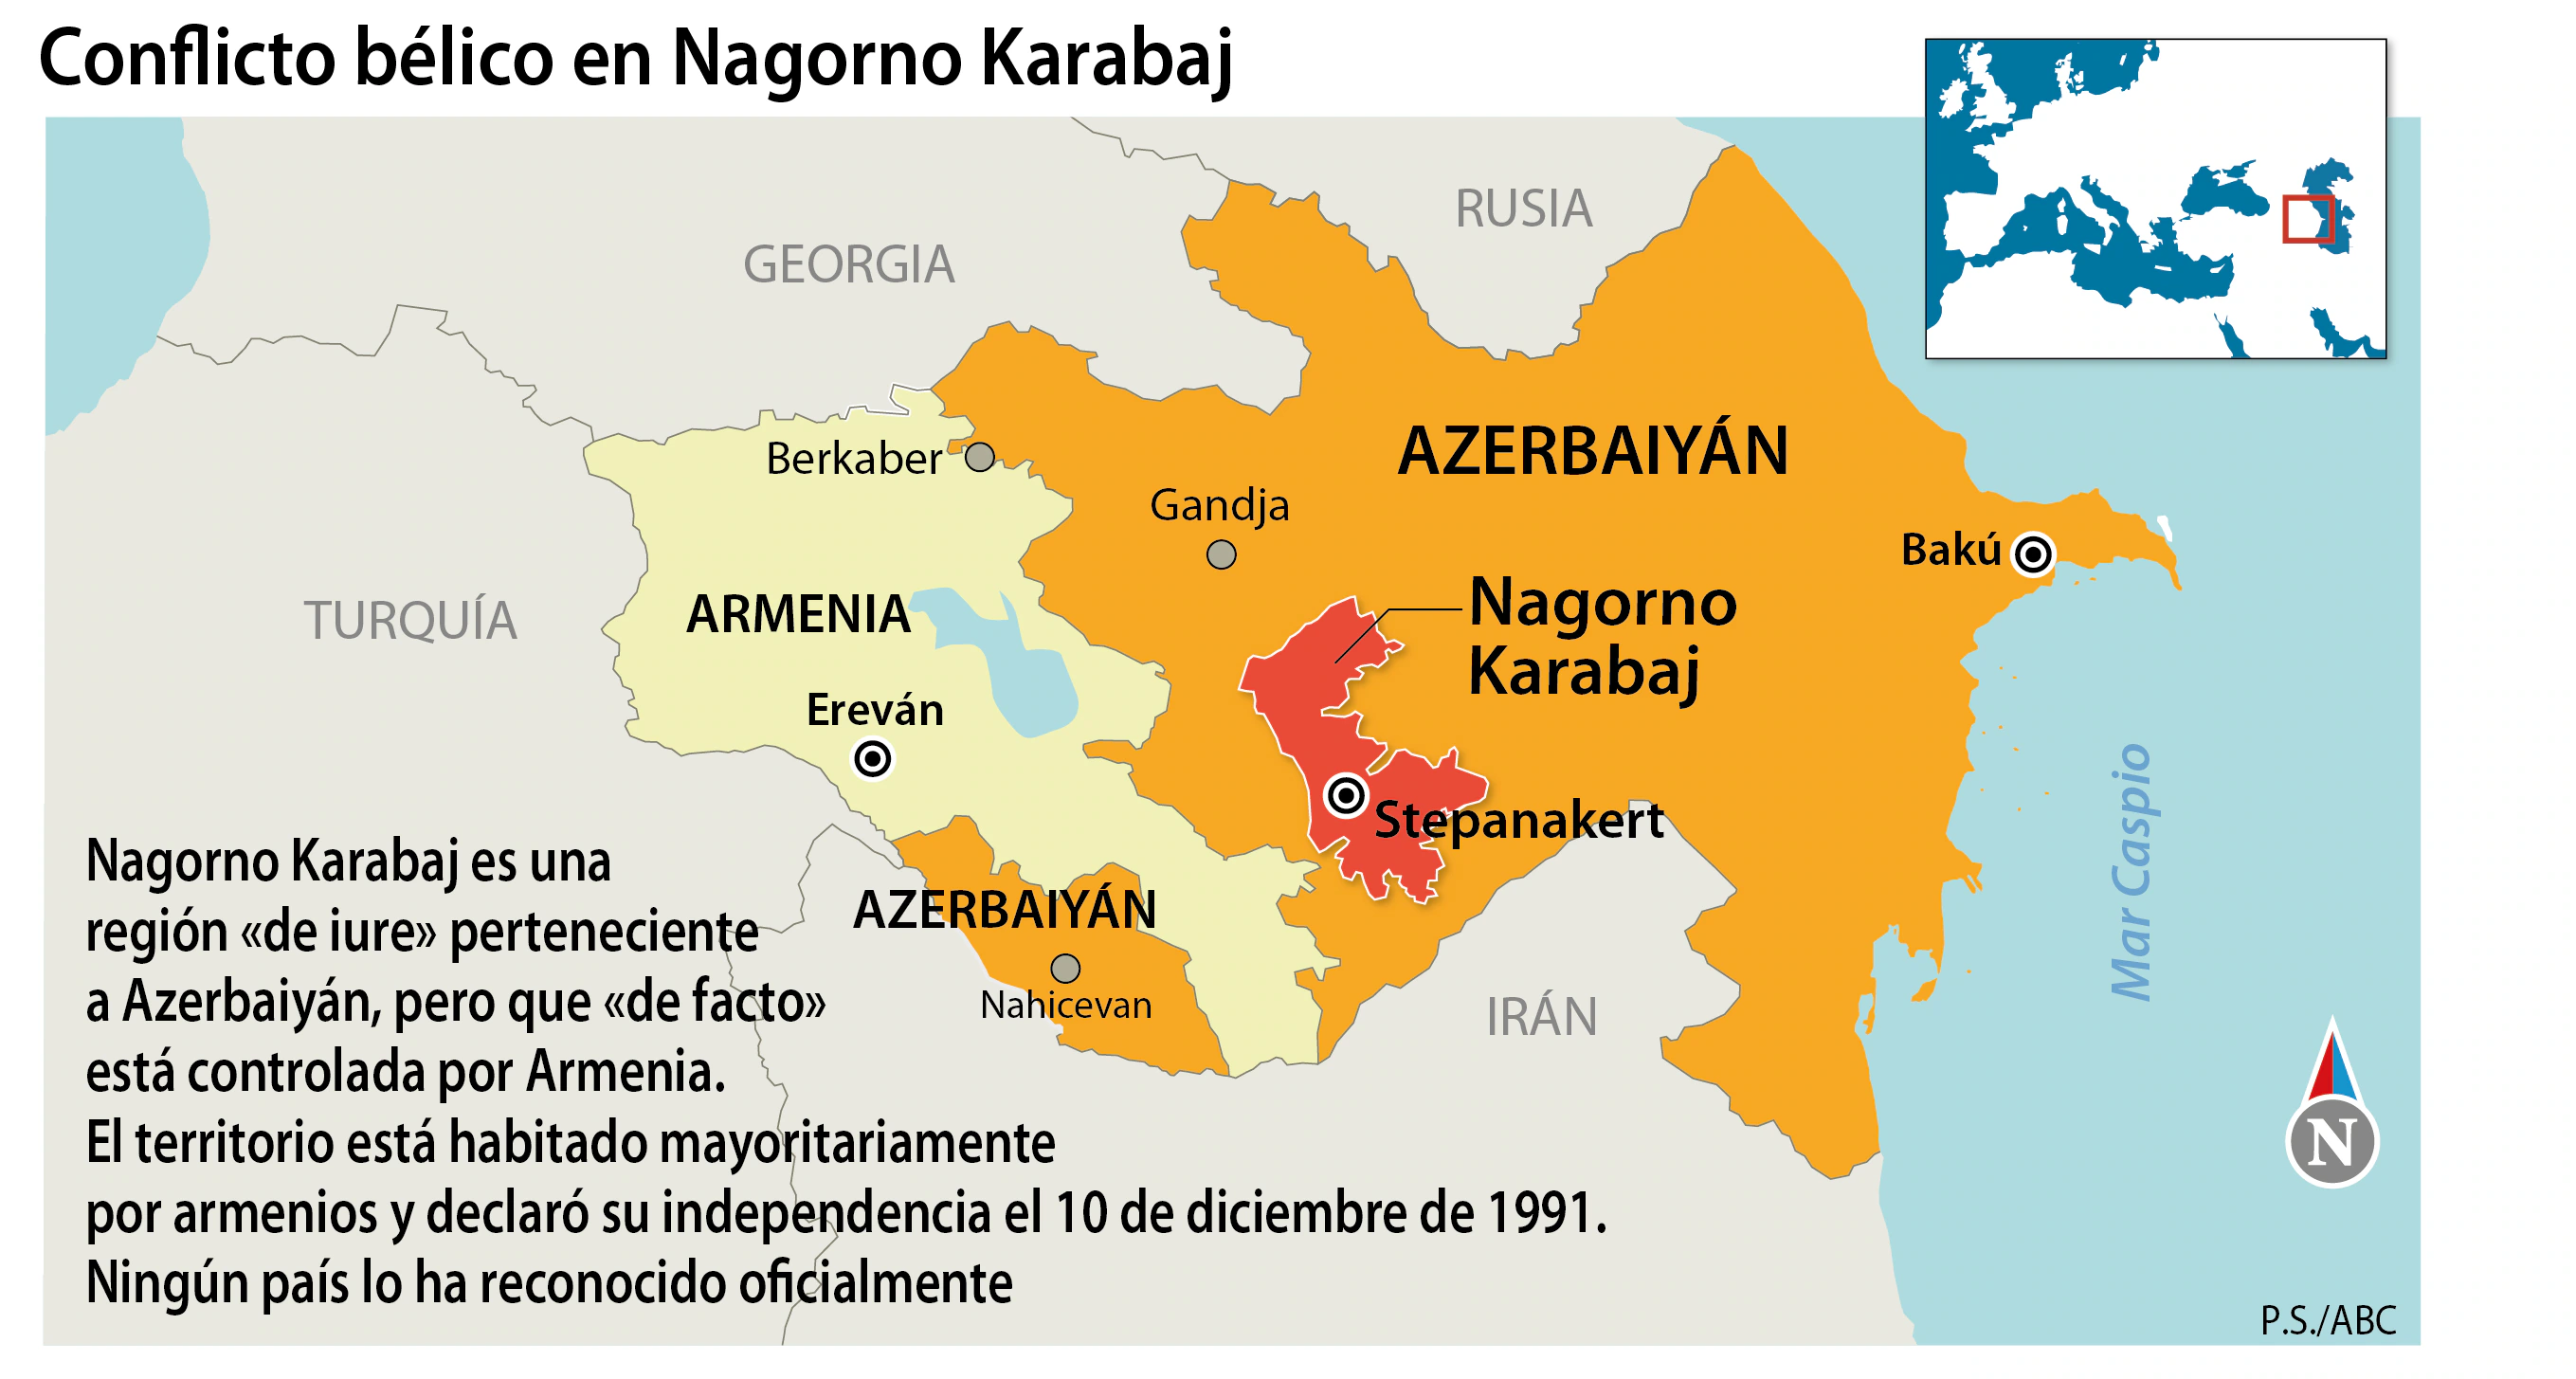 Las seis preguntas claves para entender qué pasa en Nagorno Karabaj